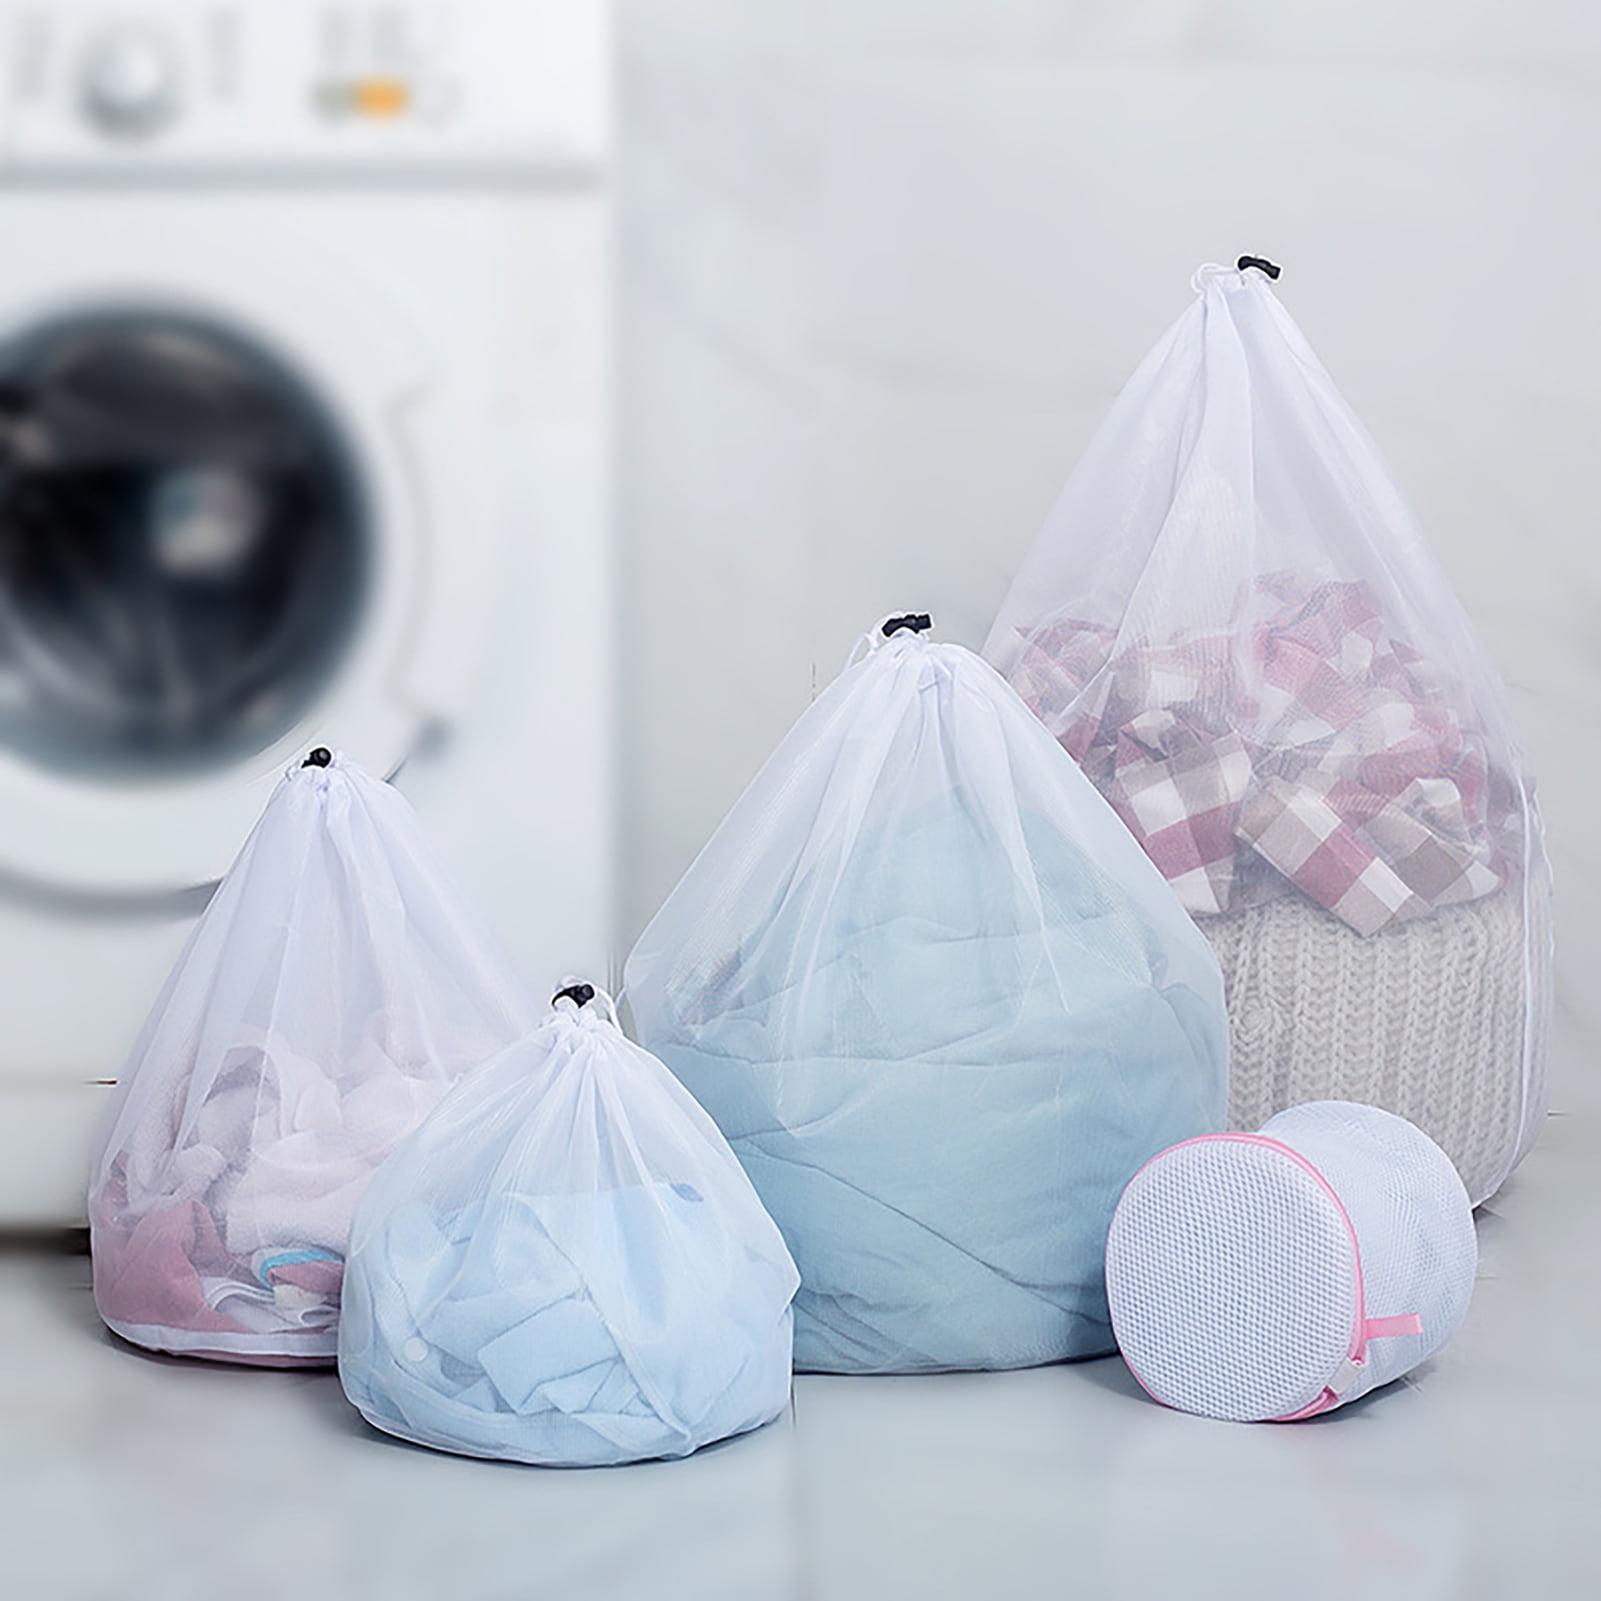 For Washing White Mesh Washing Bags Large Laundry Bag DoGeek-Laundry Bags 